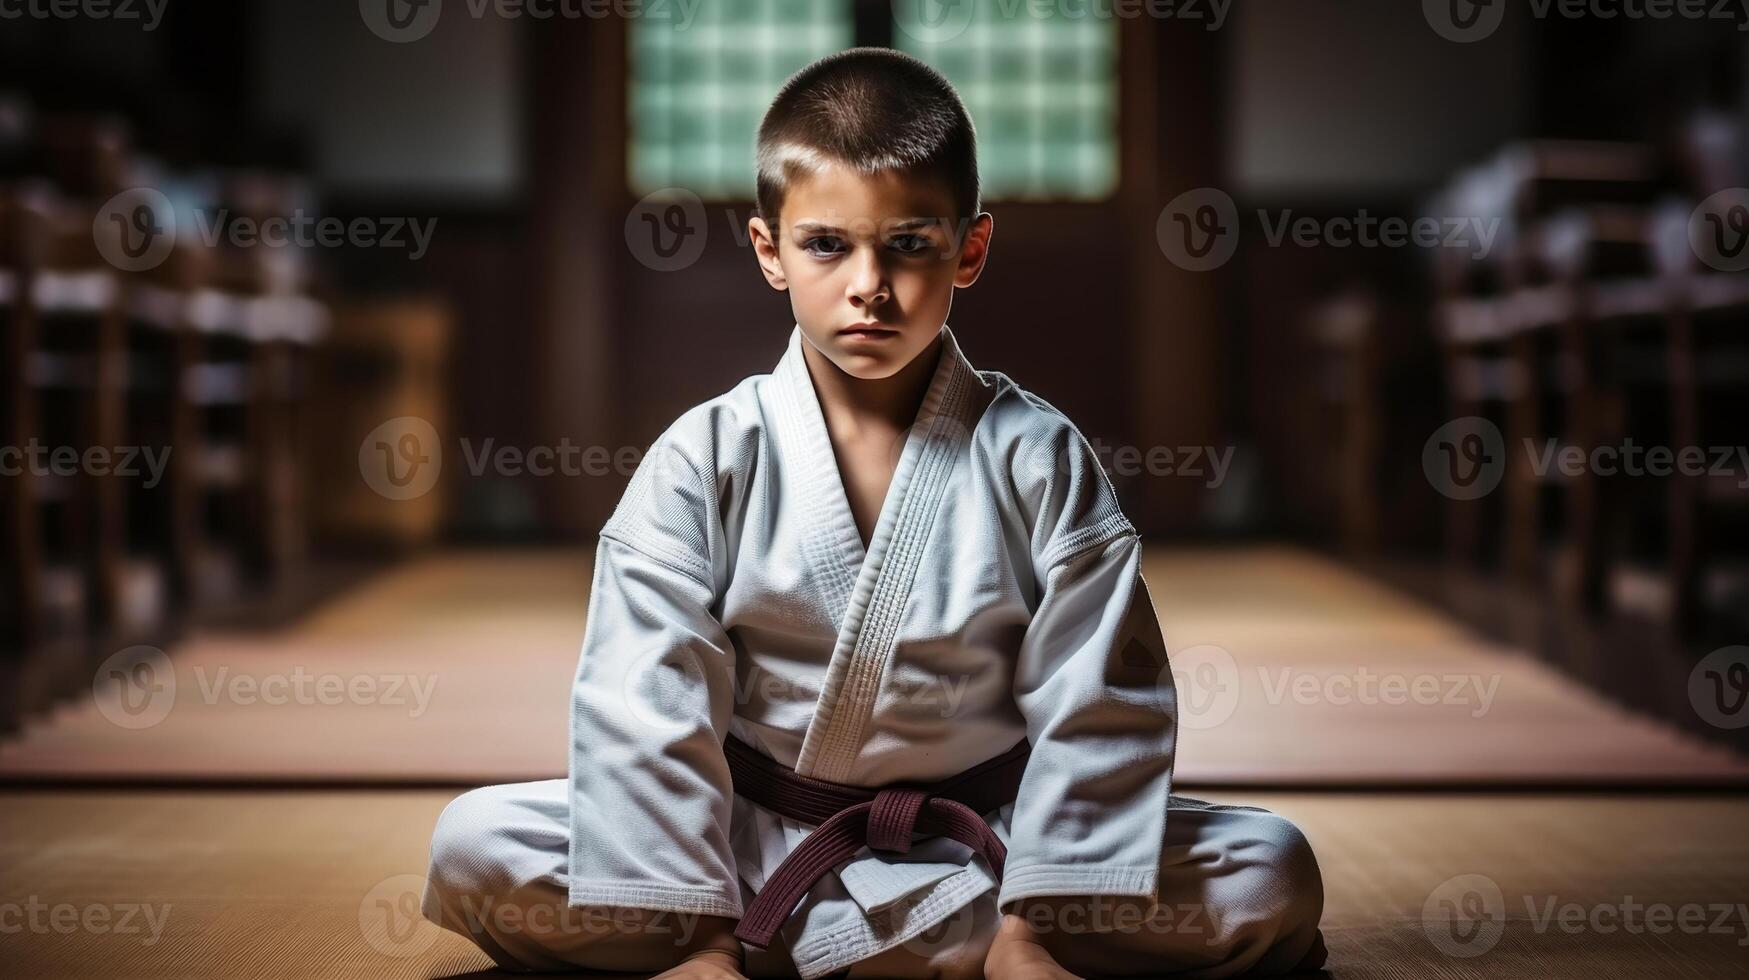 AI generated Japanese boy in traditional white kimono practicing sambo, jiu jitsu, karate martial arts technique in outdoor setting photo